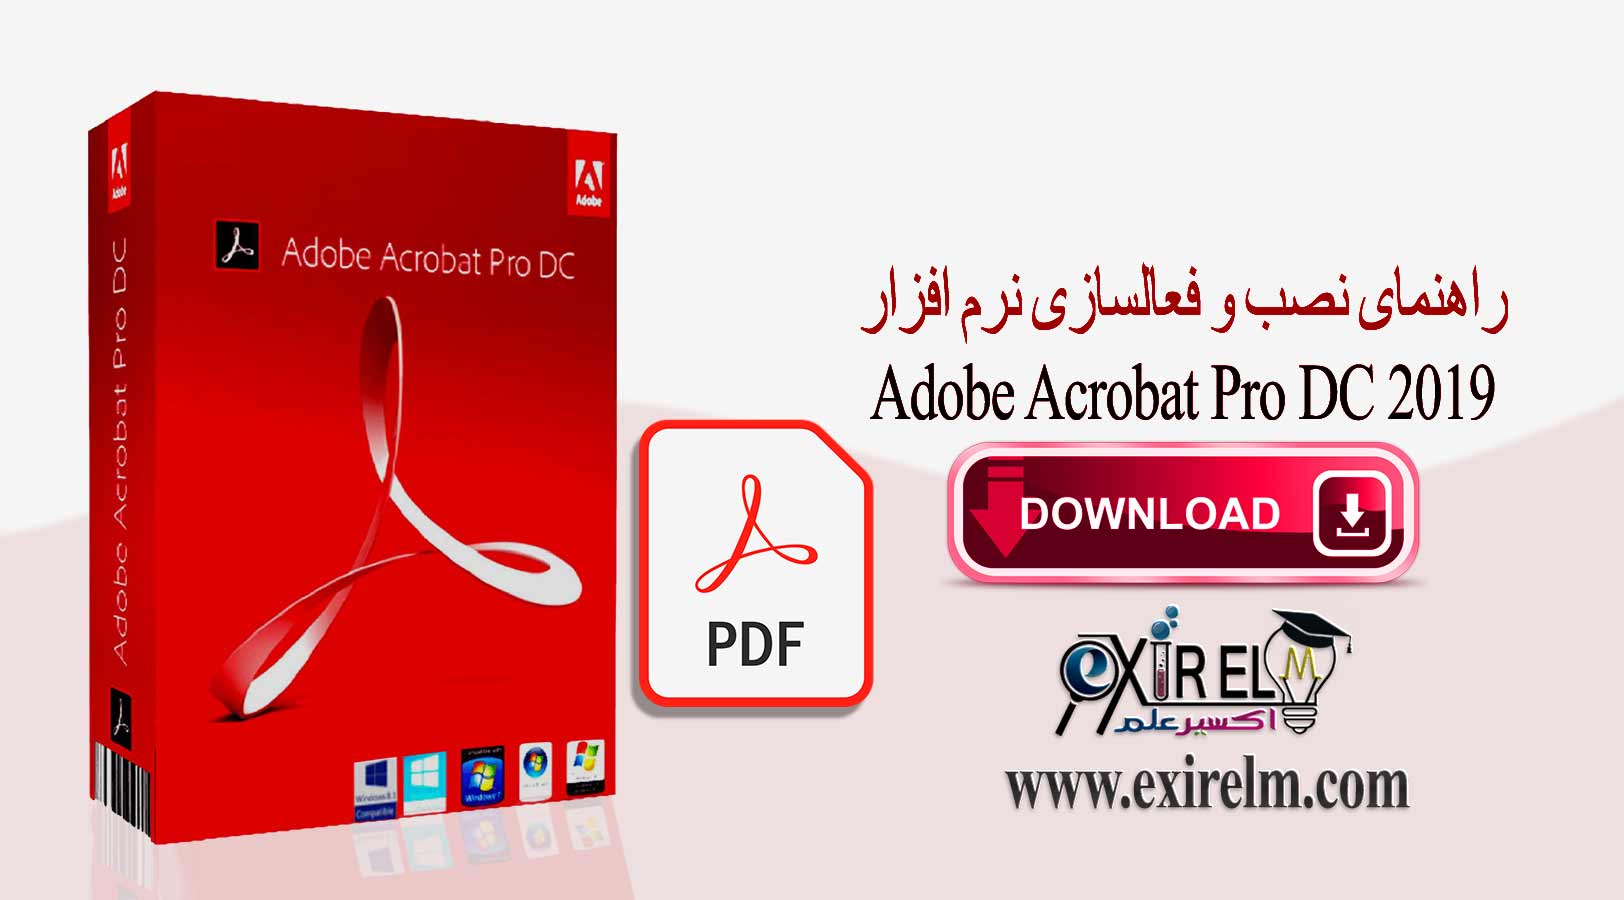 Adobe Acrobat Reader DC 2023.003.20269 for mac download